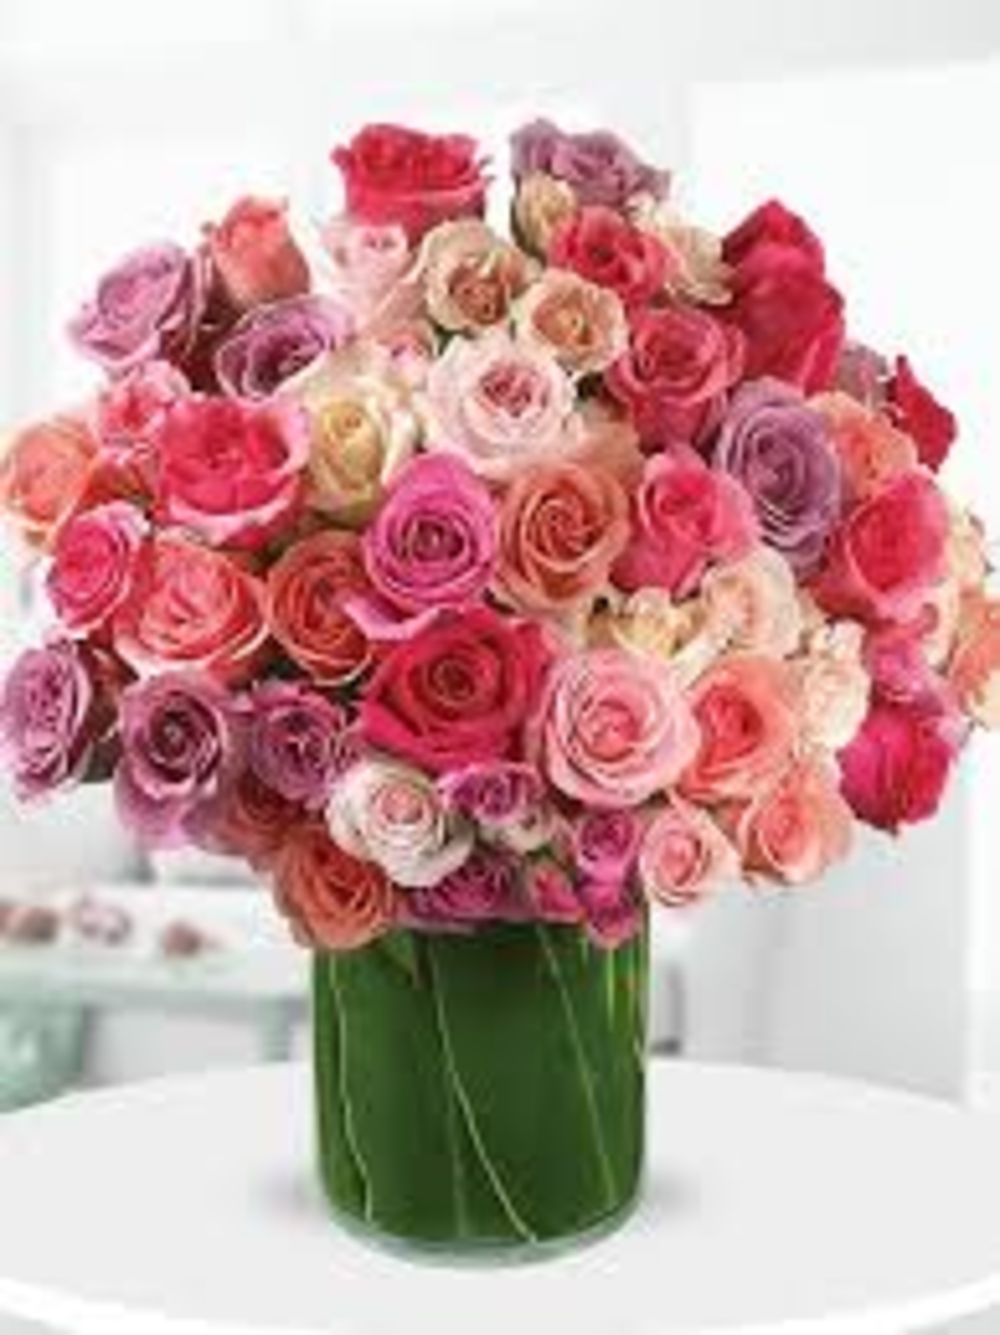 50 Mixed Rose Flowers Vase